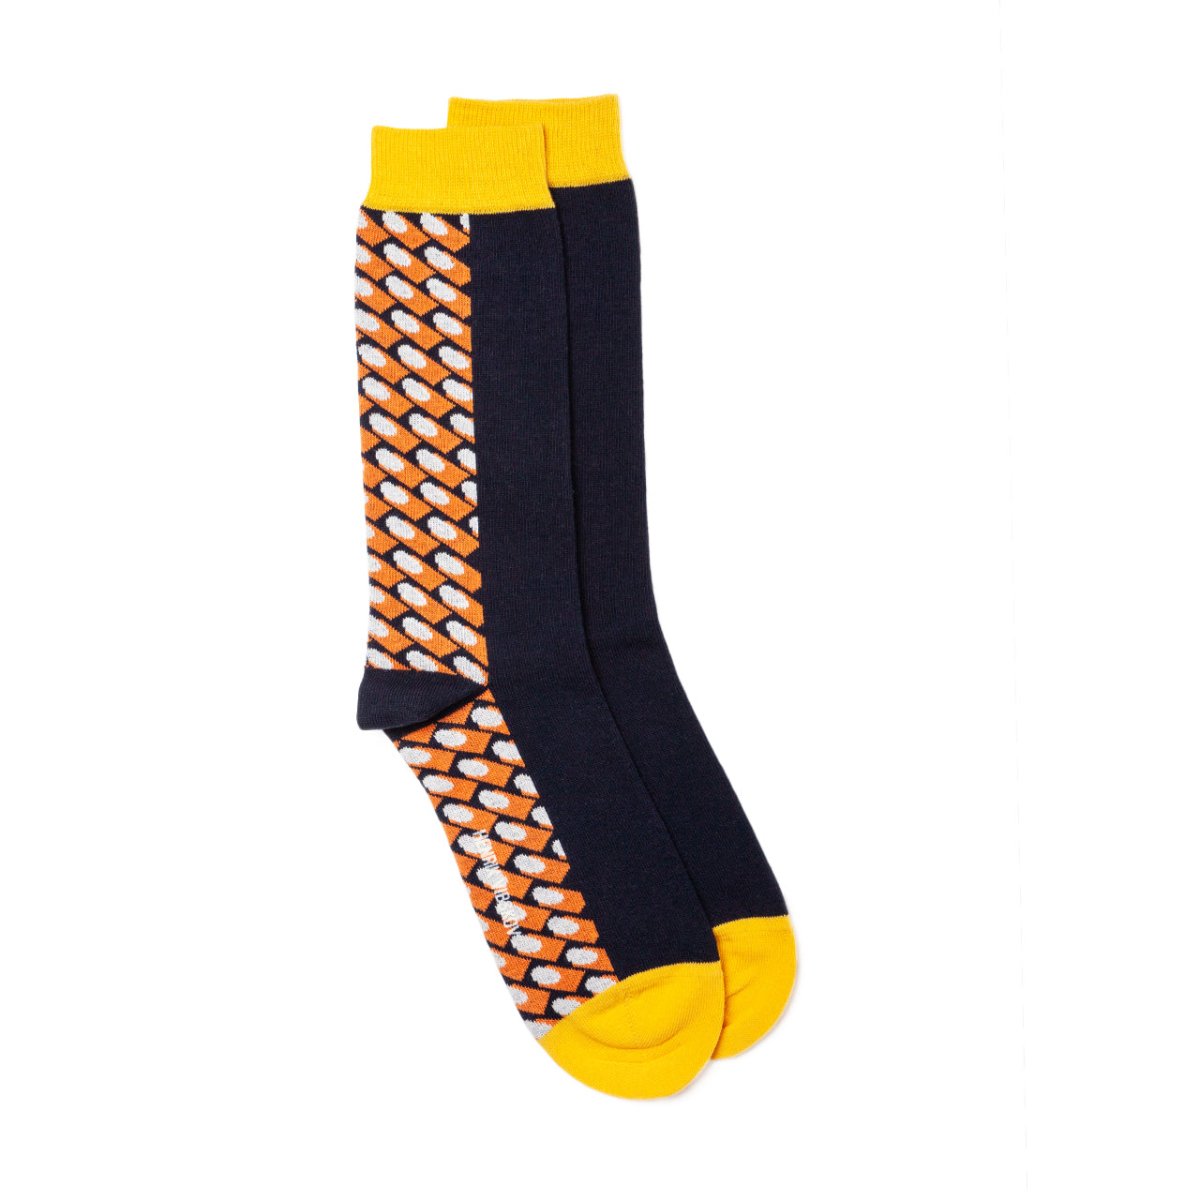 Henrik Vibskov Bounceback Socks (Schwarz / Orange)  - Allike Store